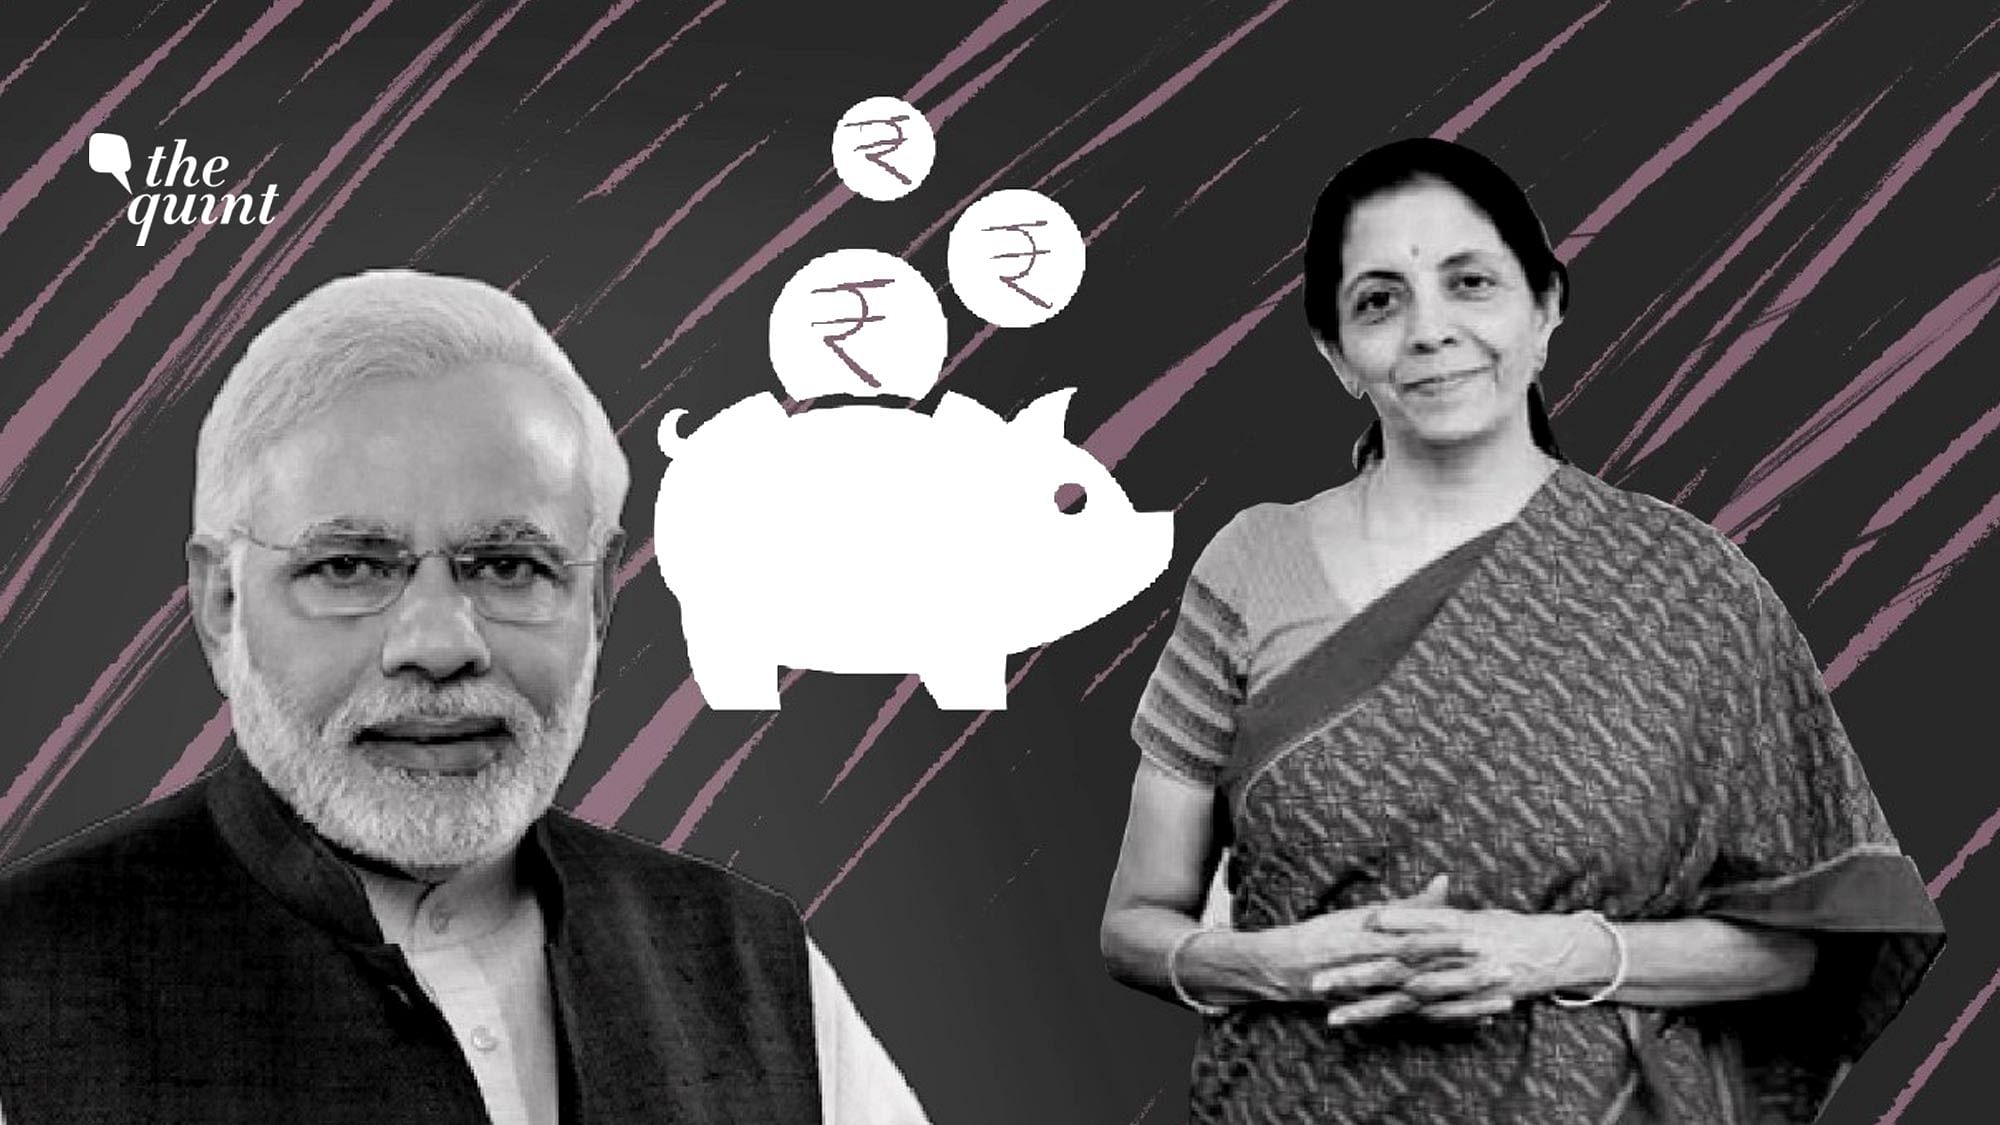 Image of PM Modi and Nirmala Sitharaman used for representational purposes.